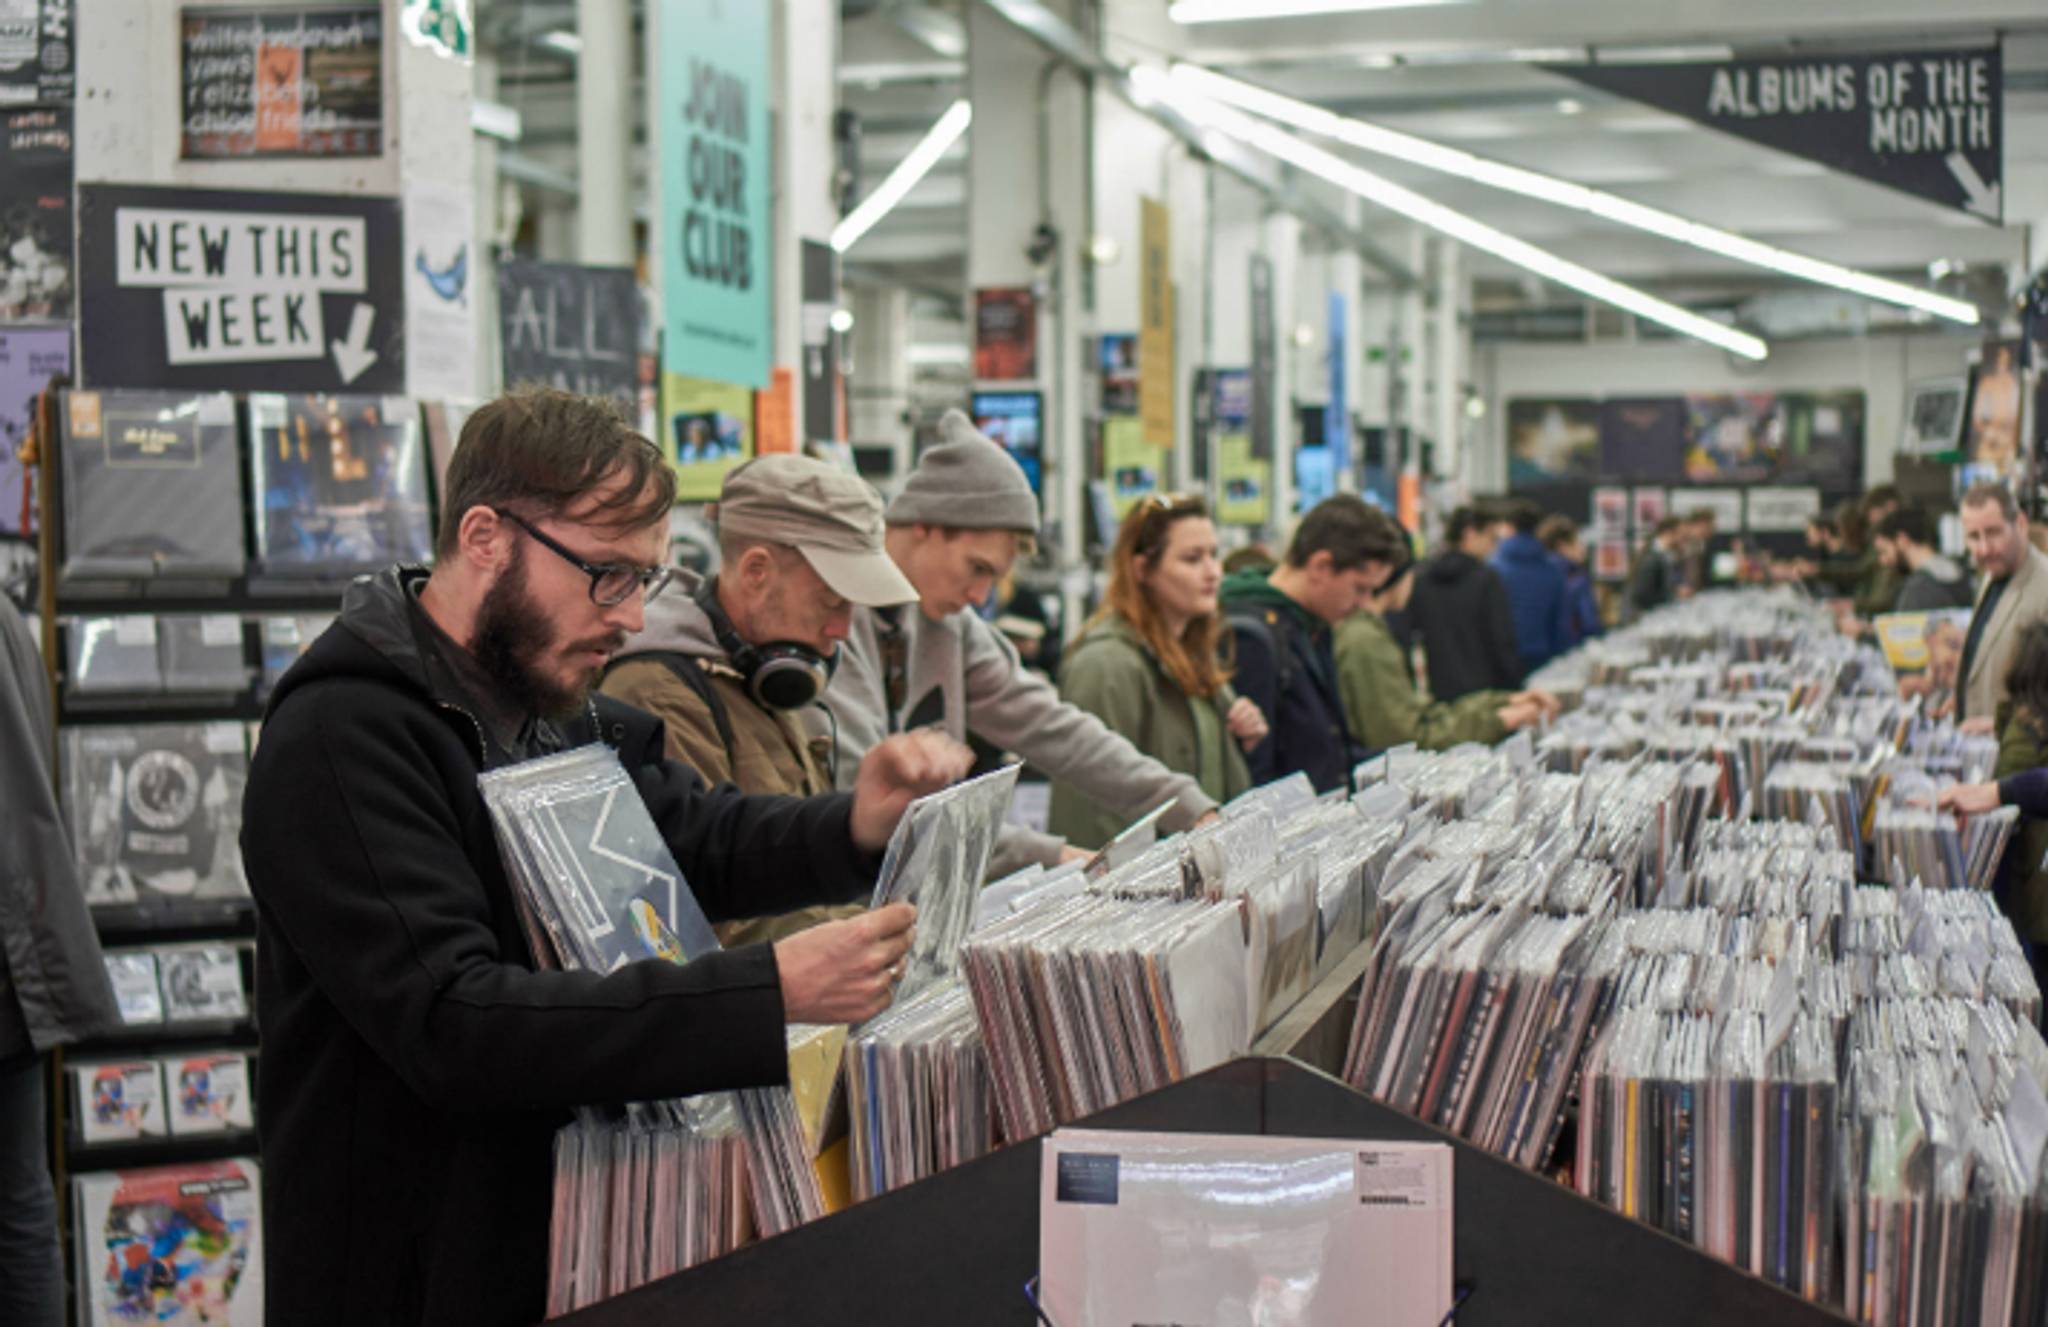 Vinyl resurgence led by superfans, not nostalgia